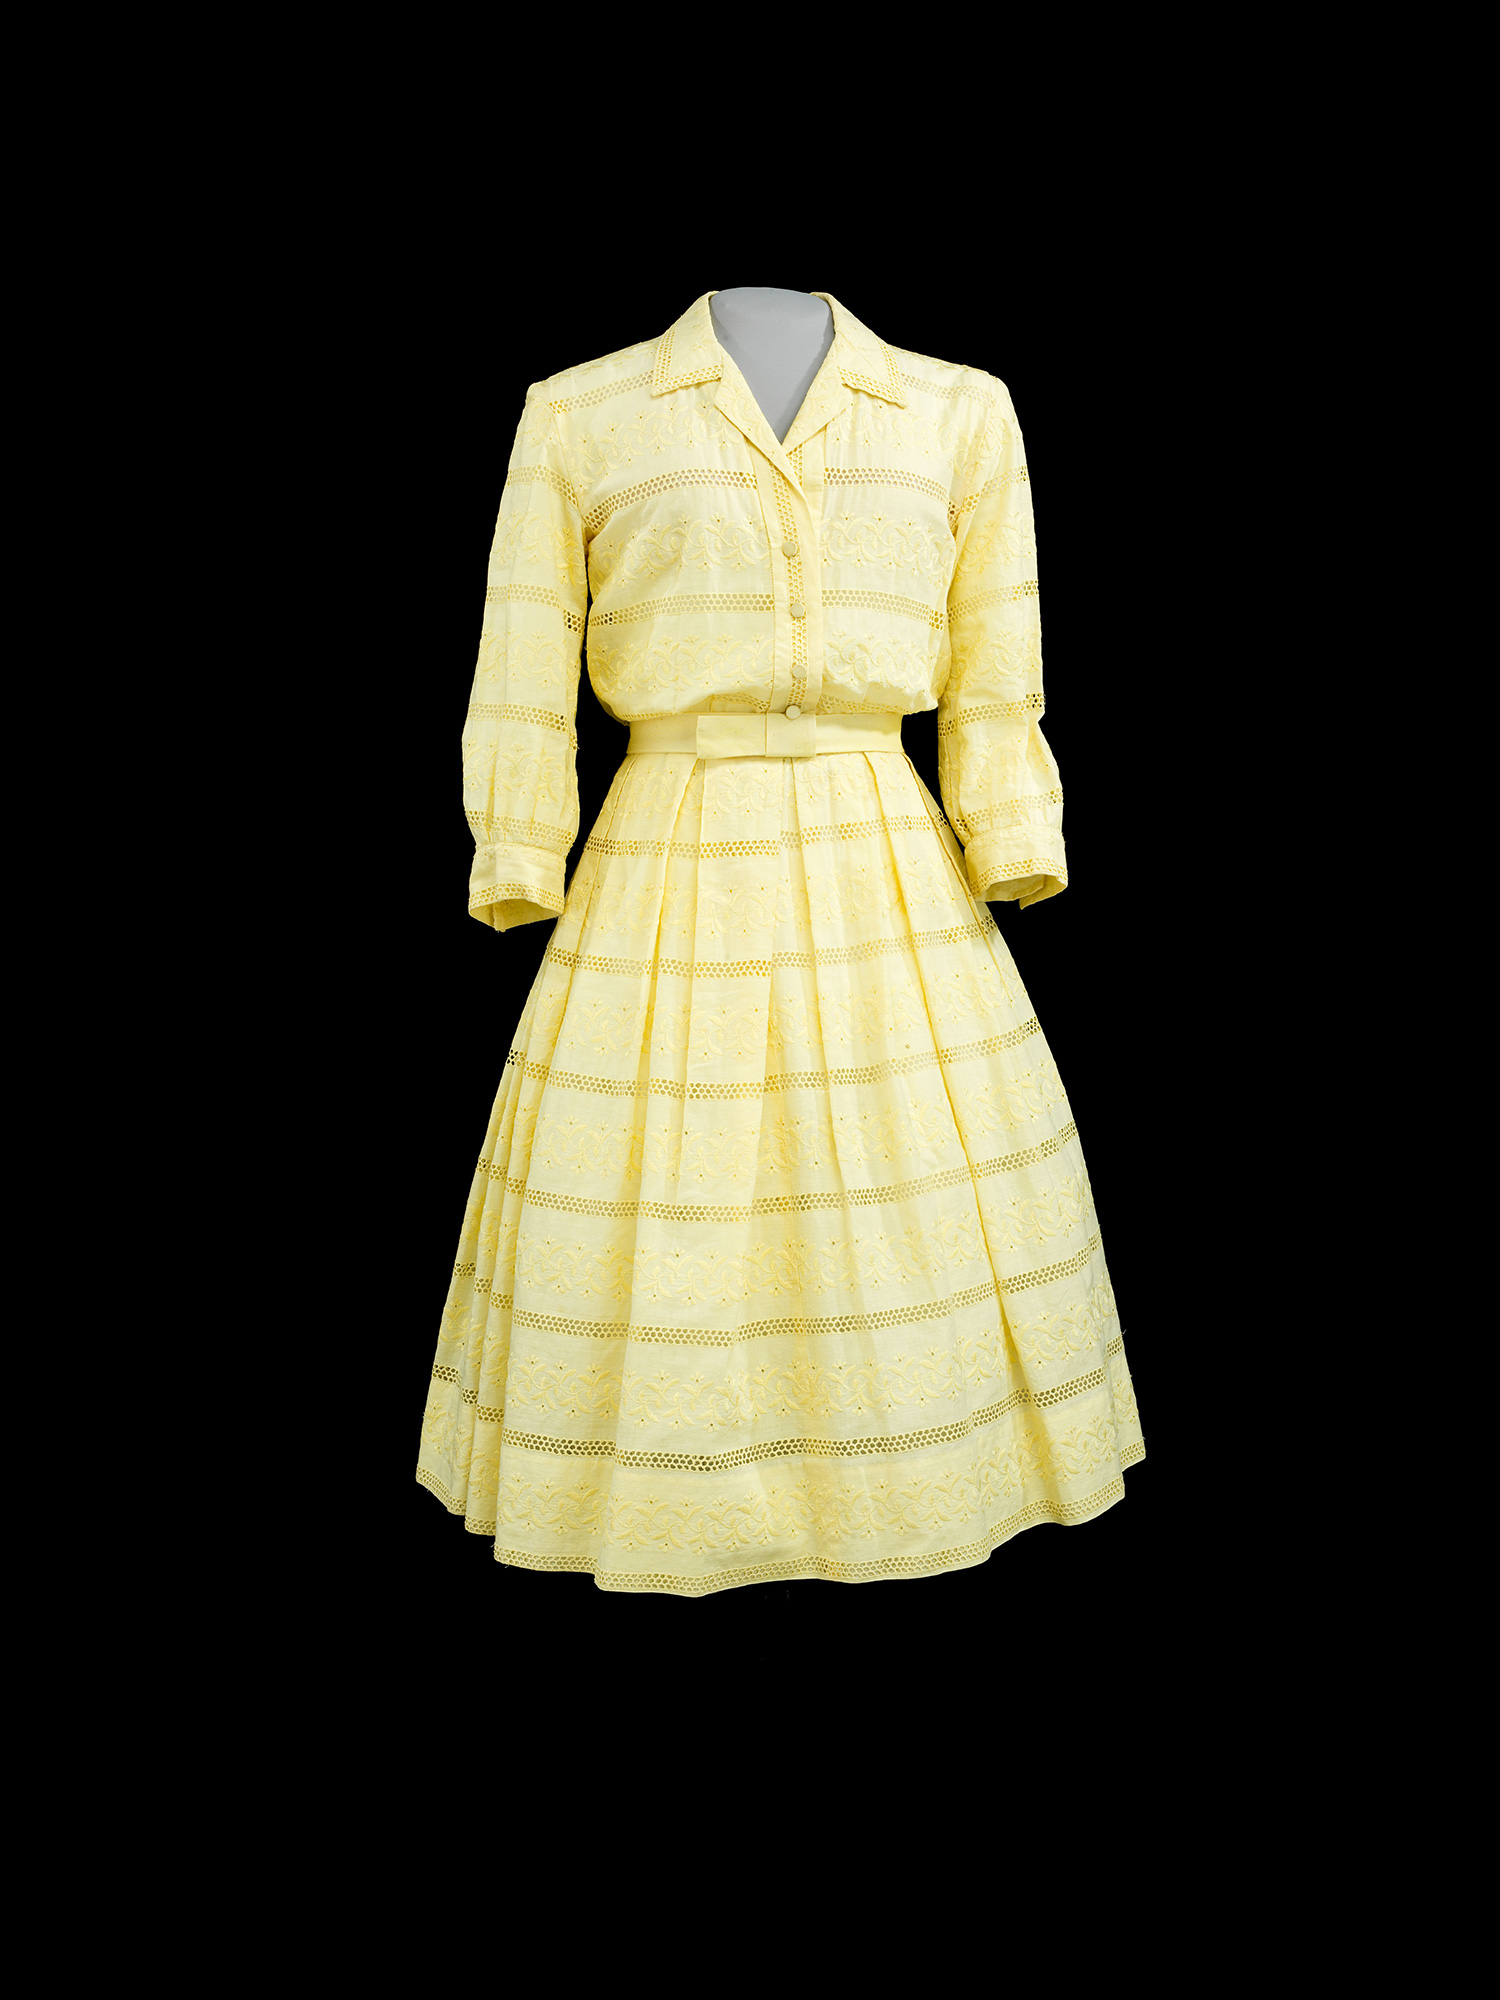 Yellow house dress for the character of Betty Draper (January Jones) worn in Season 1, episode 4